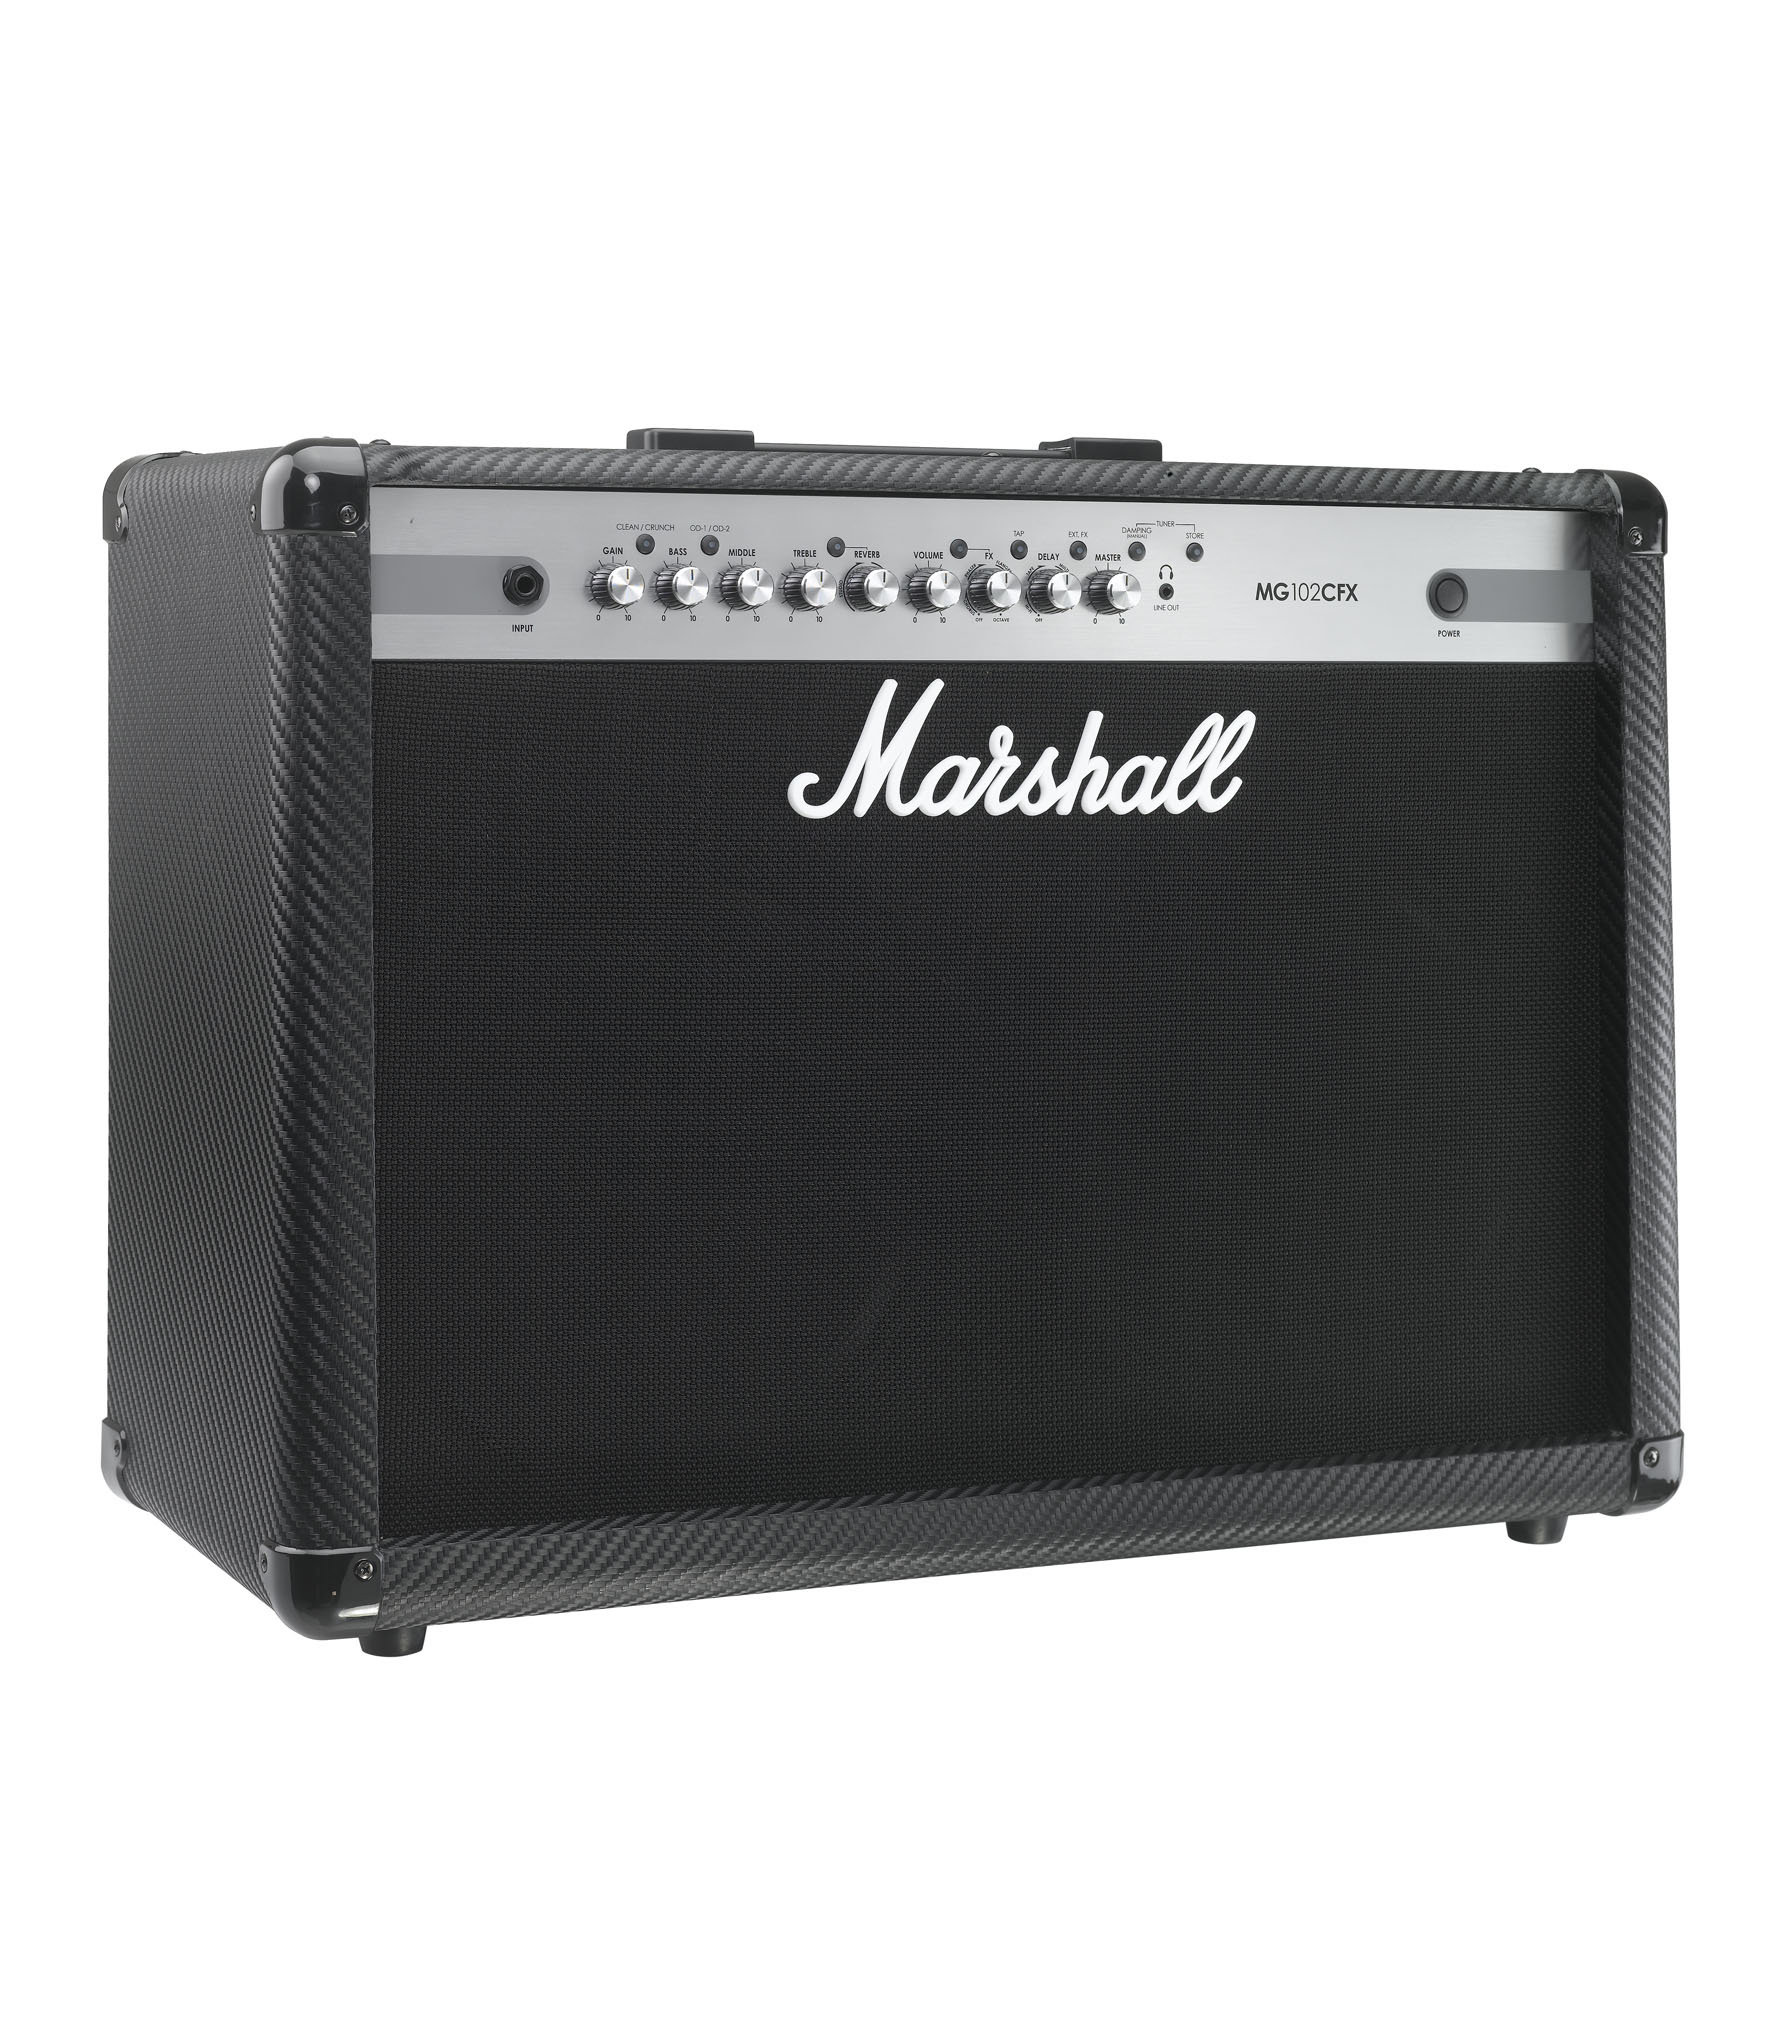 Marshall - MG102CFX - Melody House Musical Instruments